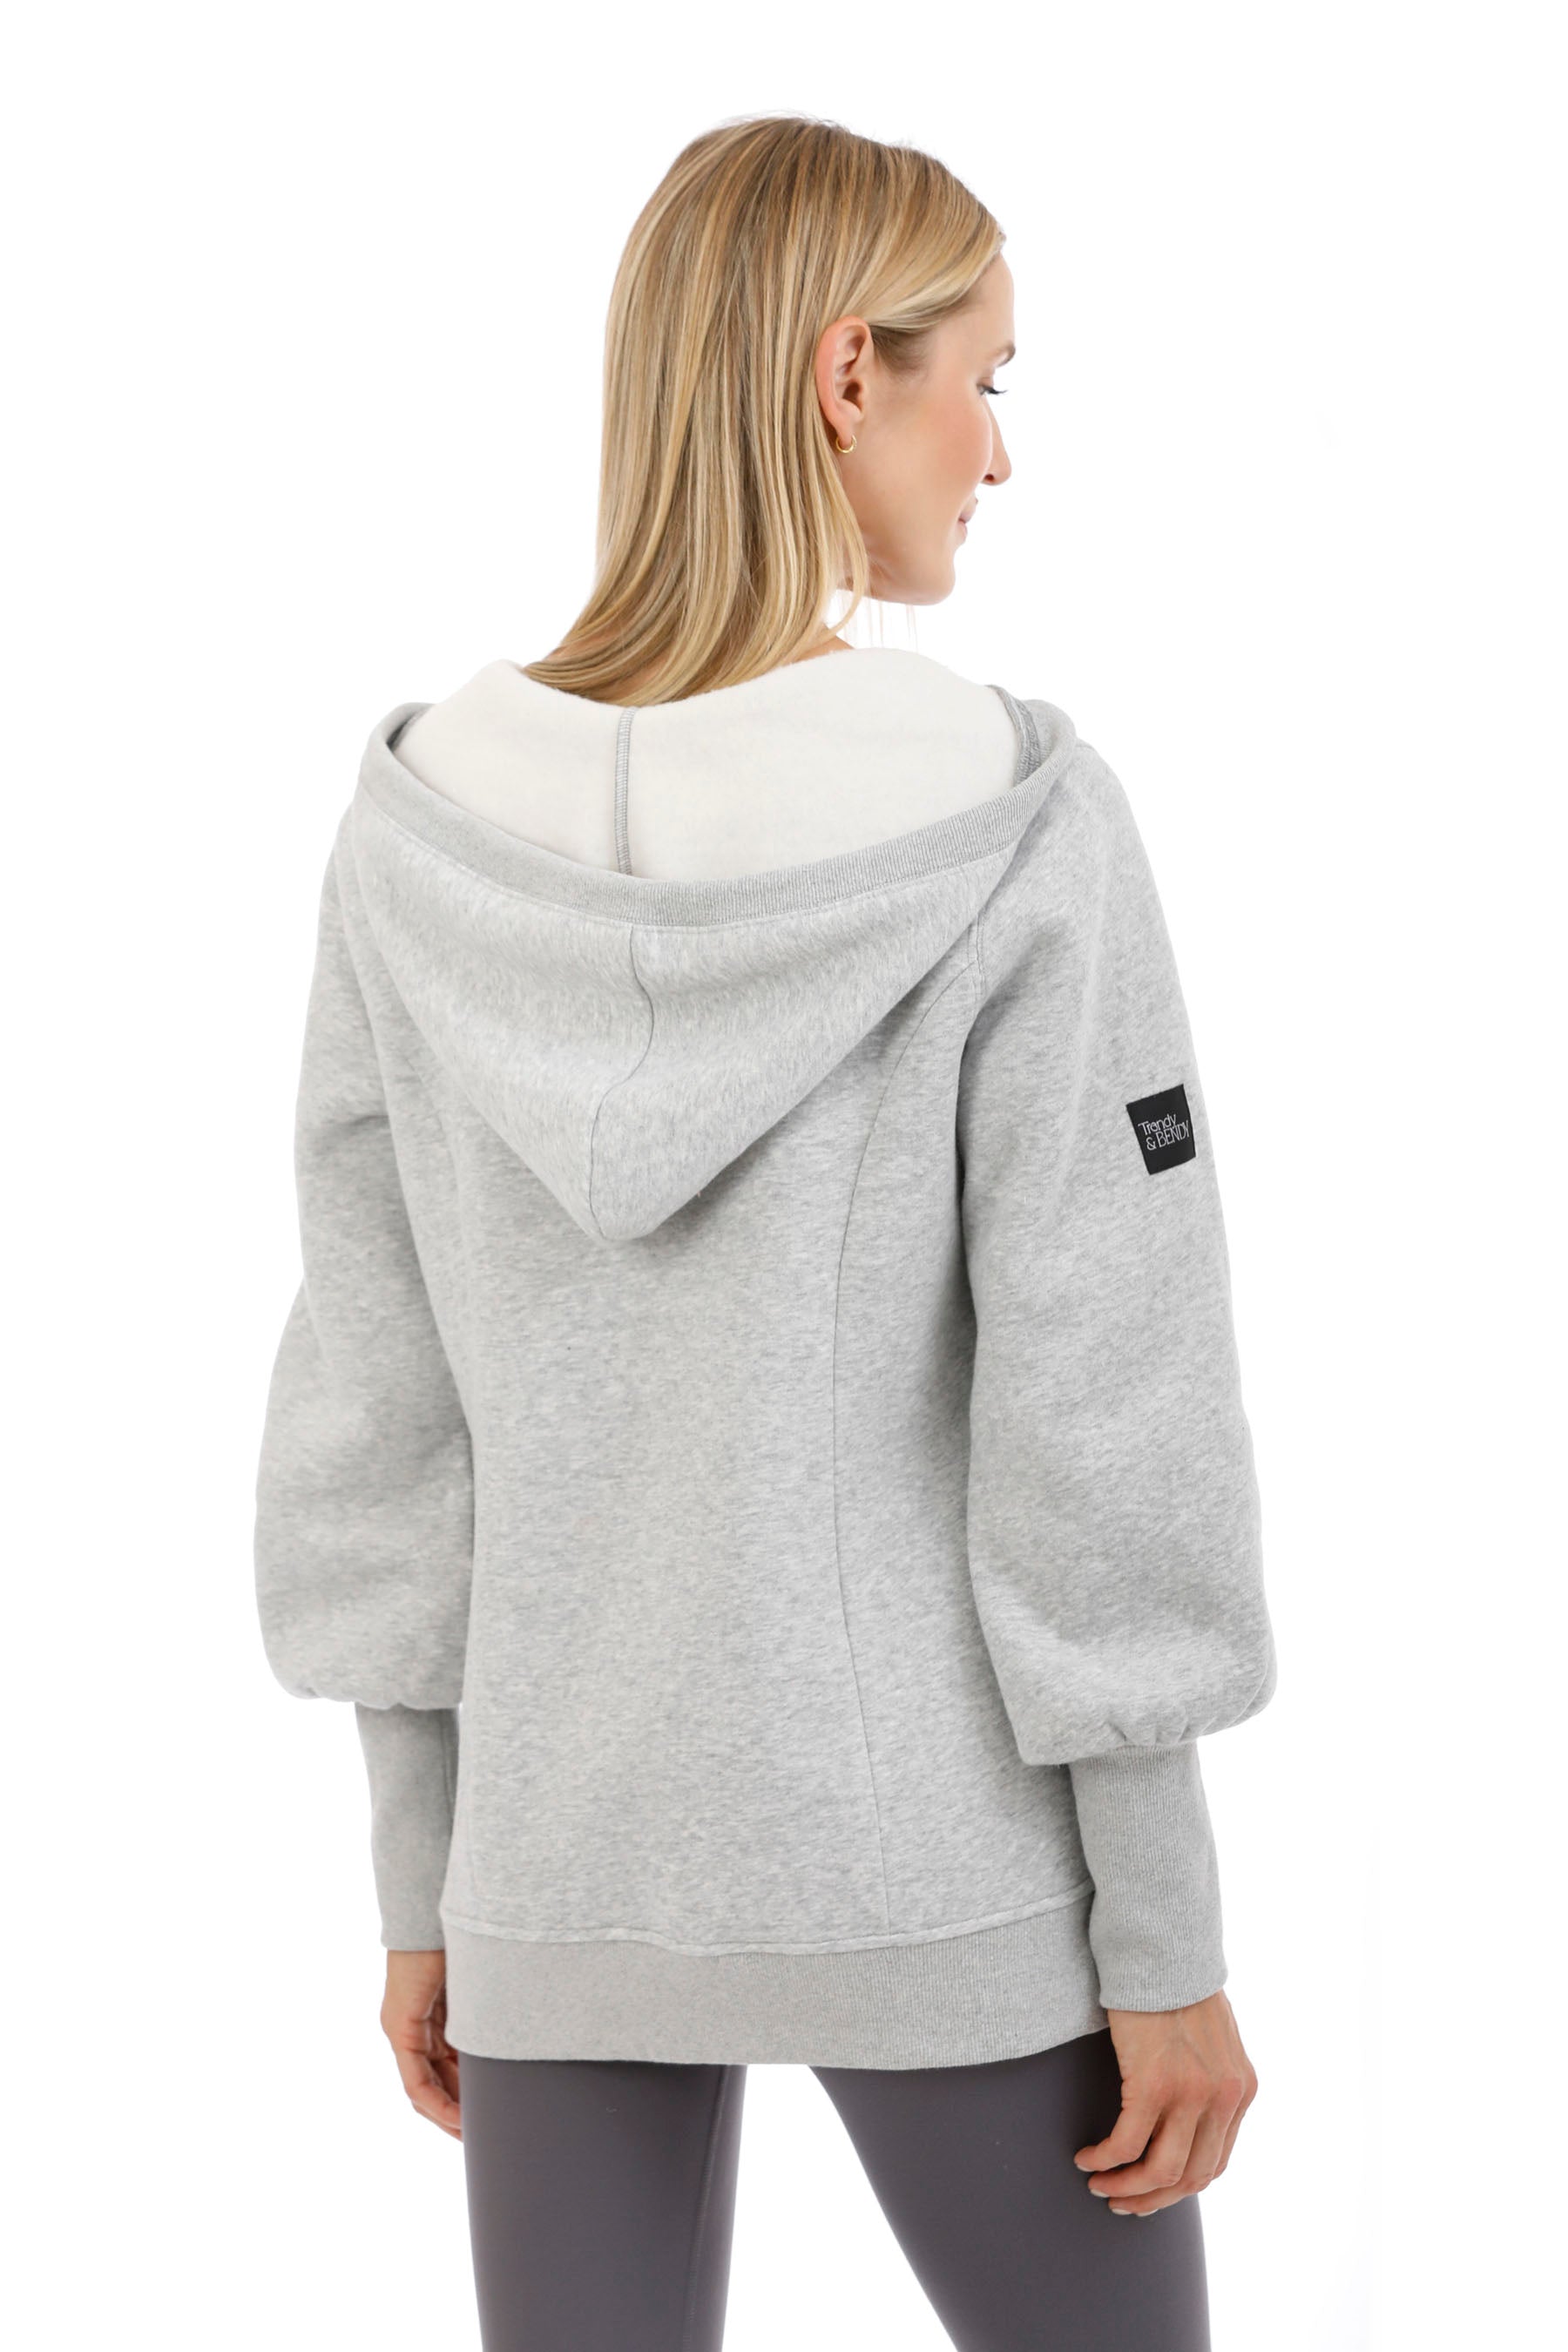 Trikona V-Neck Hooded Sweater in Heather Grey